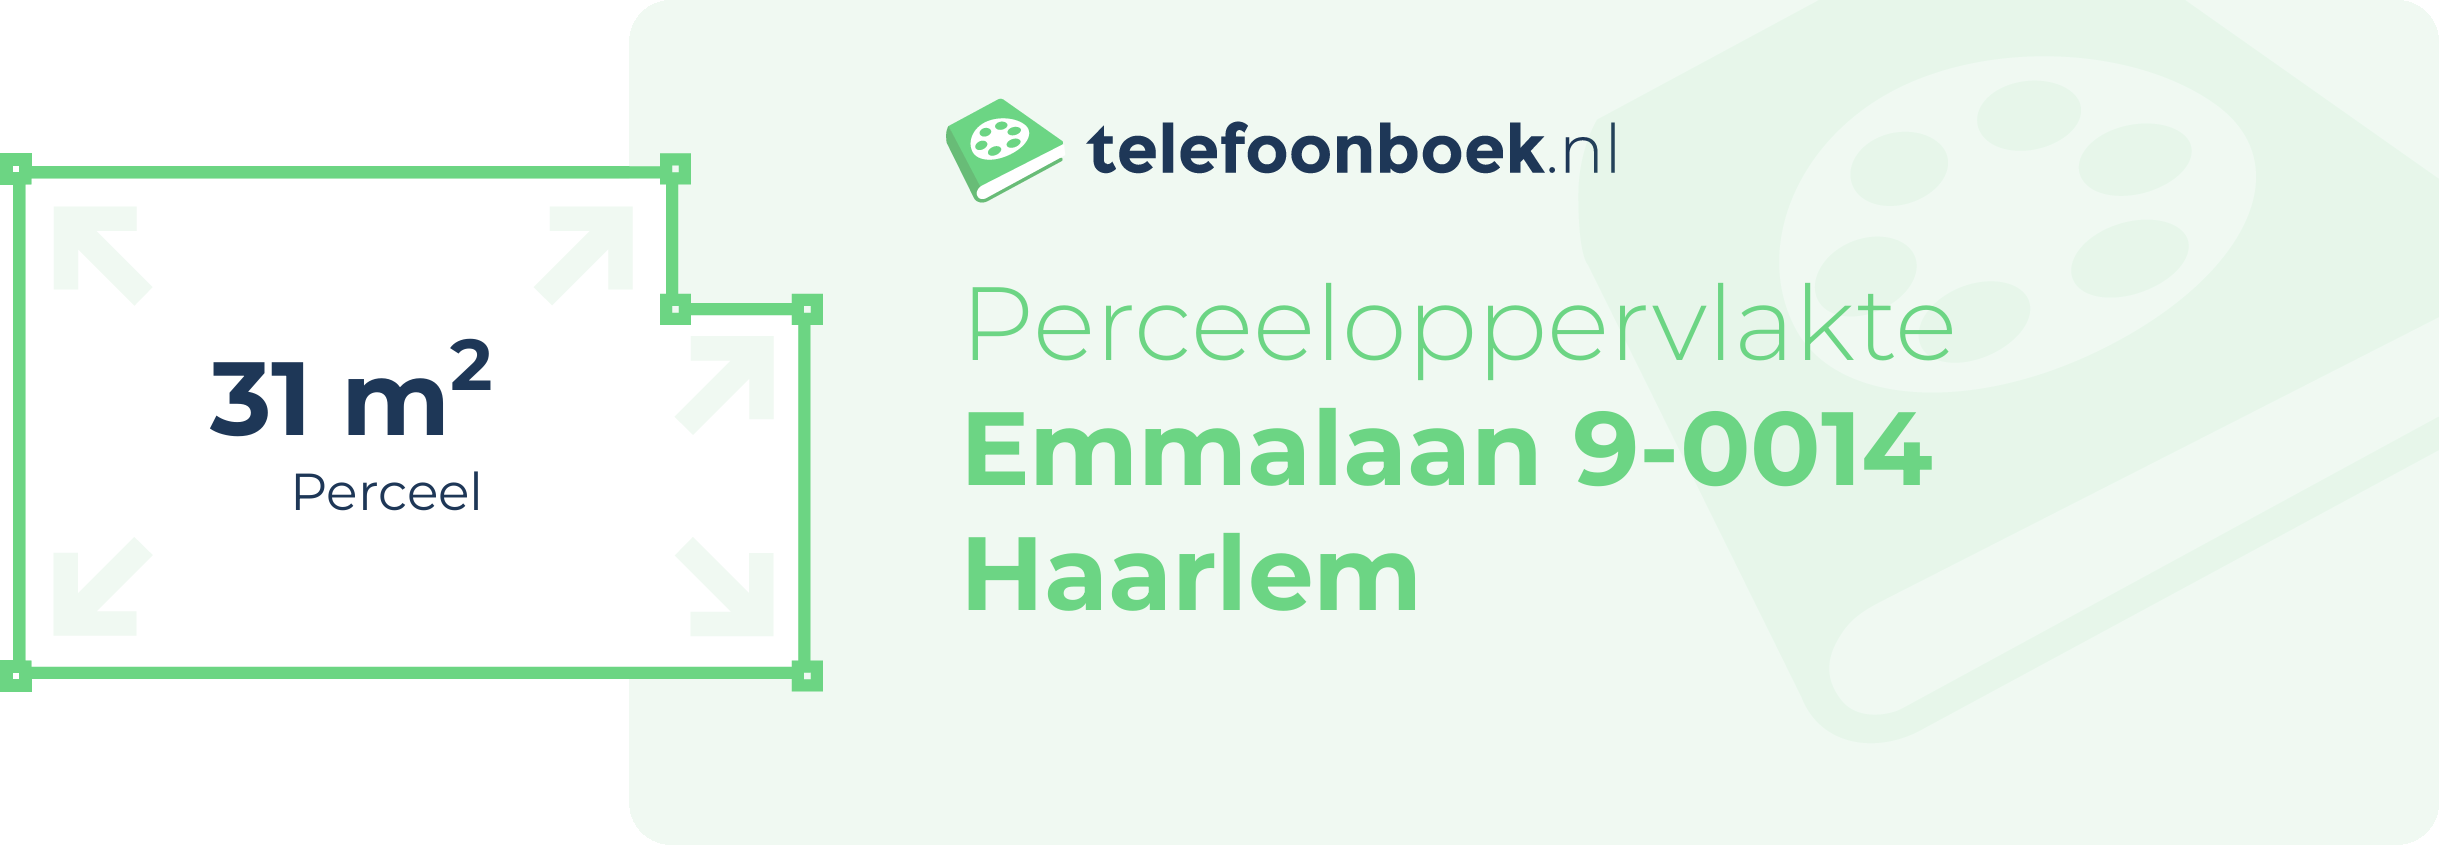 Perceeloppervlakte Emmalaan 9-0014 Haarlem